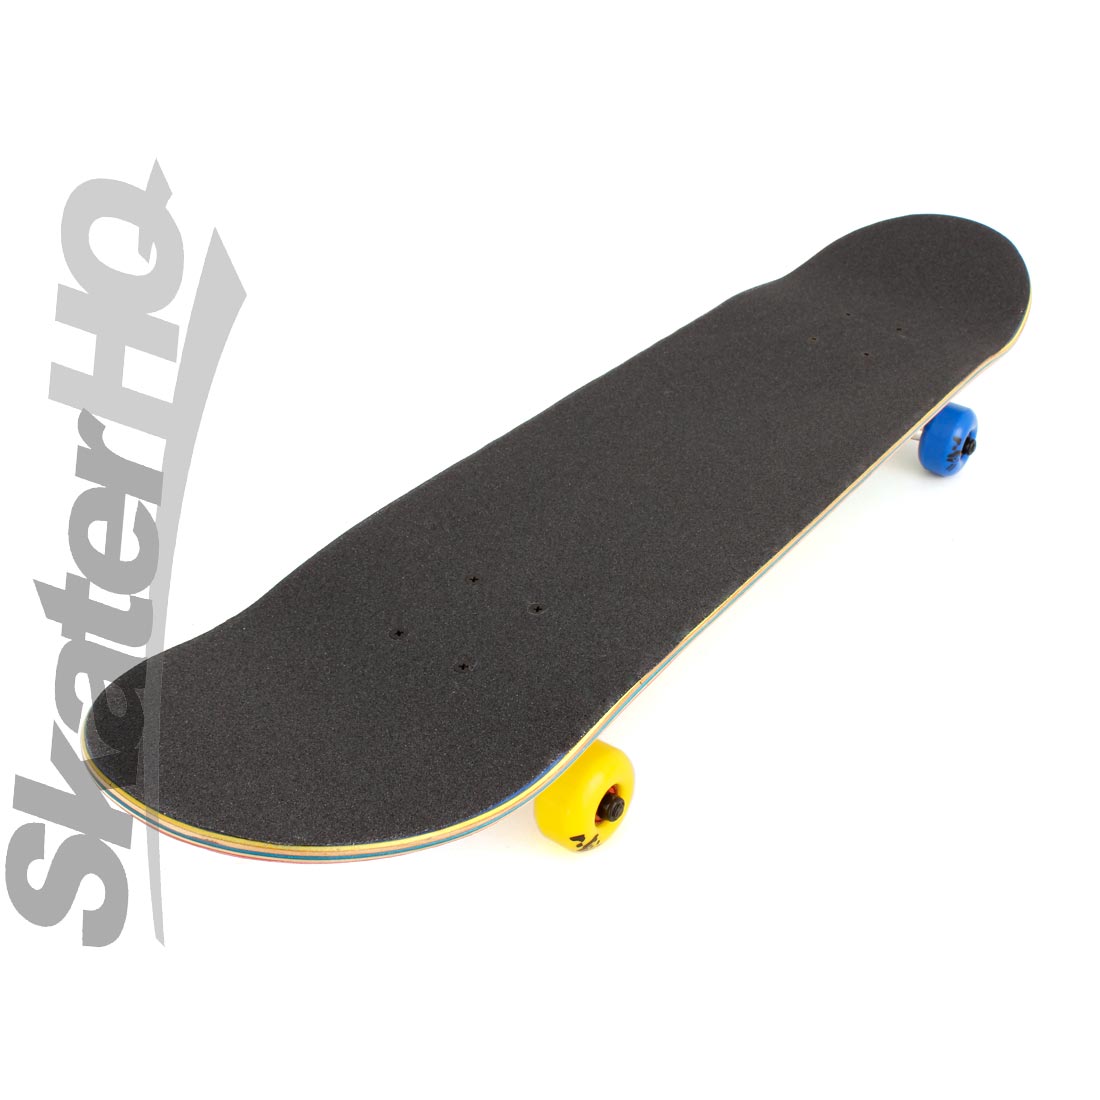 Enjoi Spectrum White 7.5 Complete Skateboard Completes Modern Street